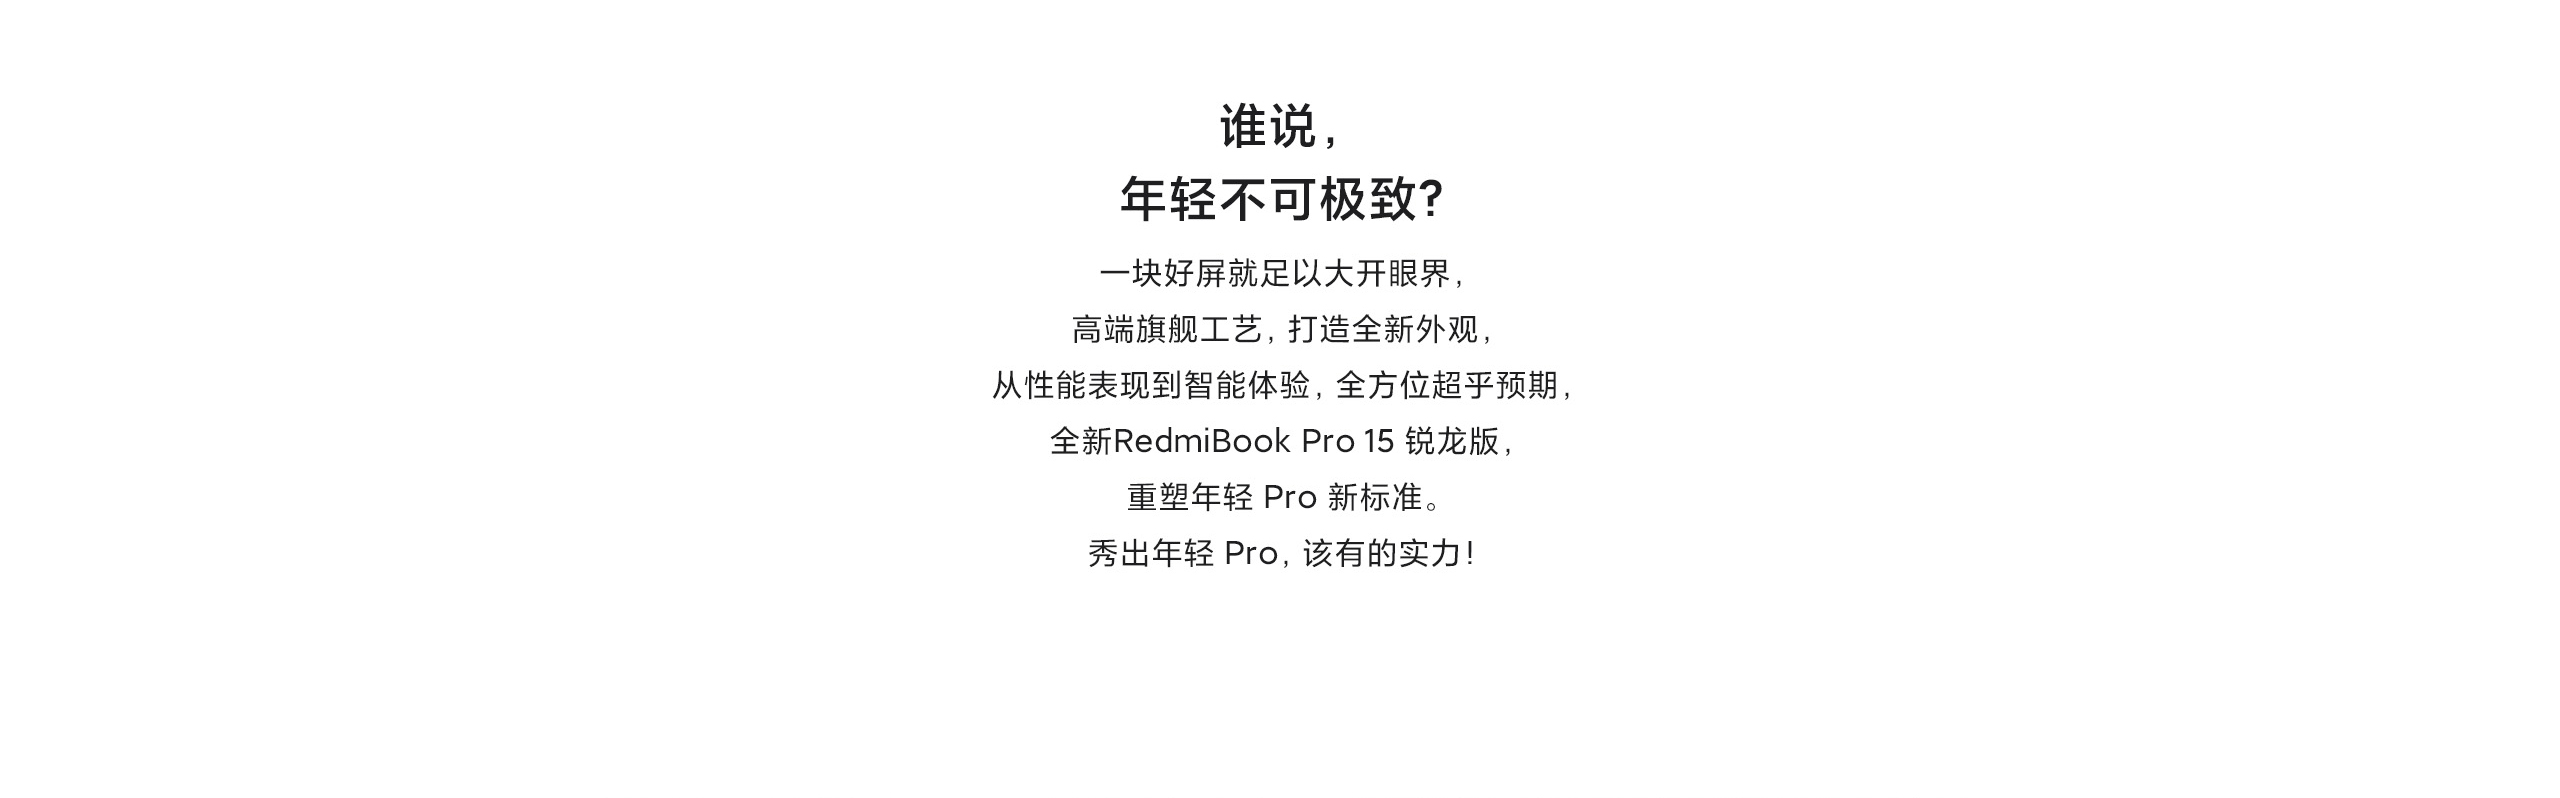 Redmibook Pro 15 锐龙版立即购买 小米商城